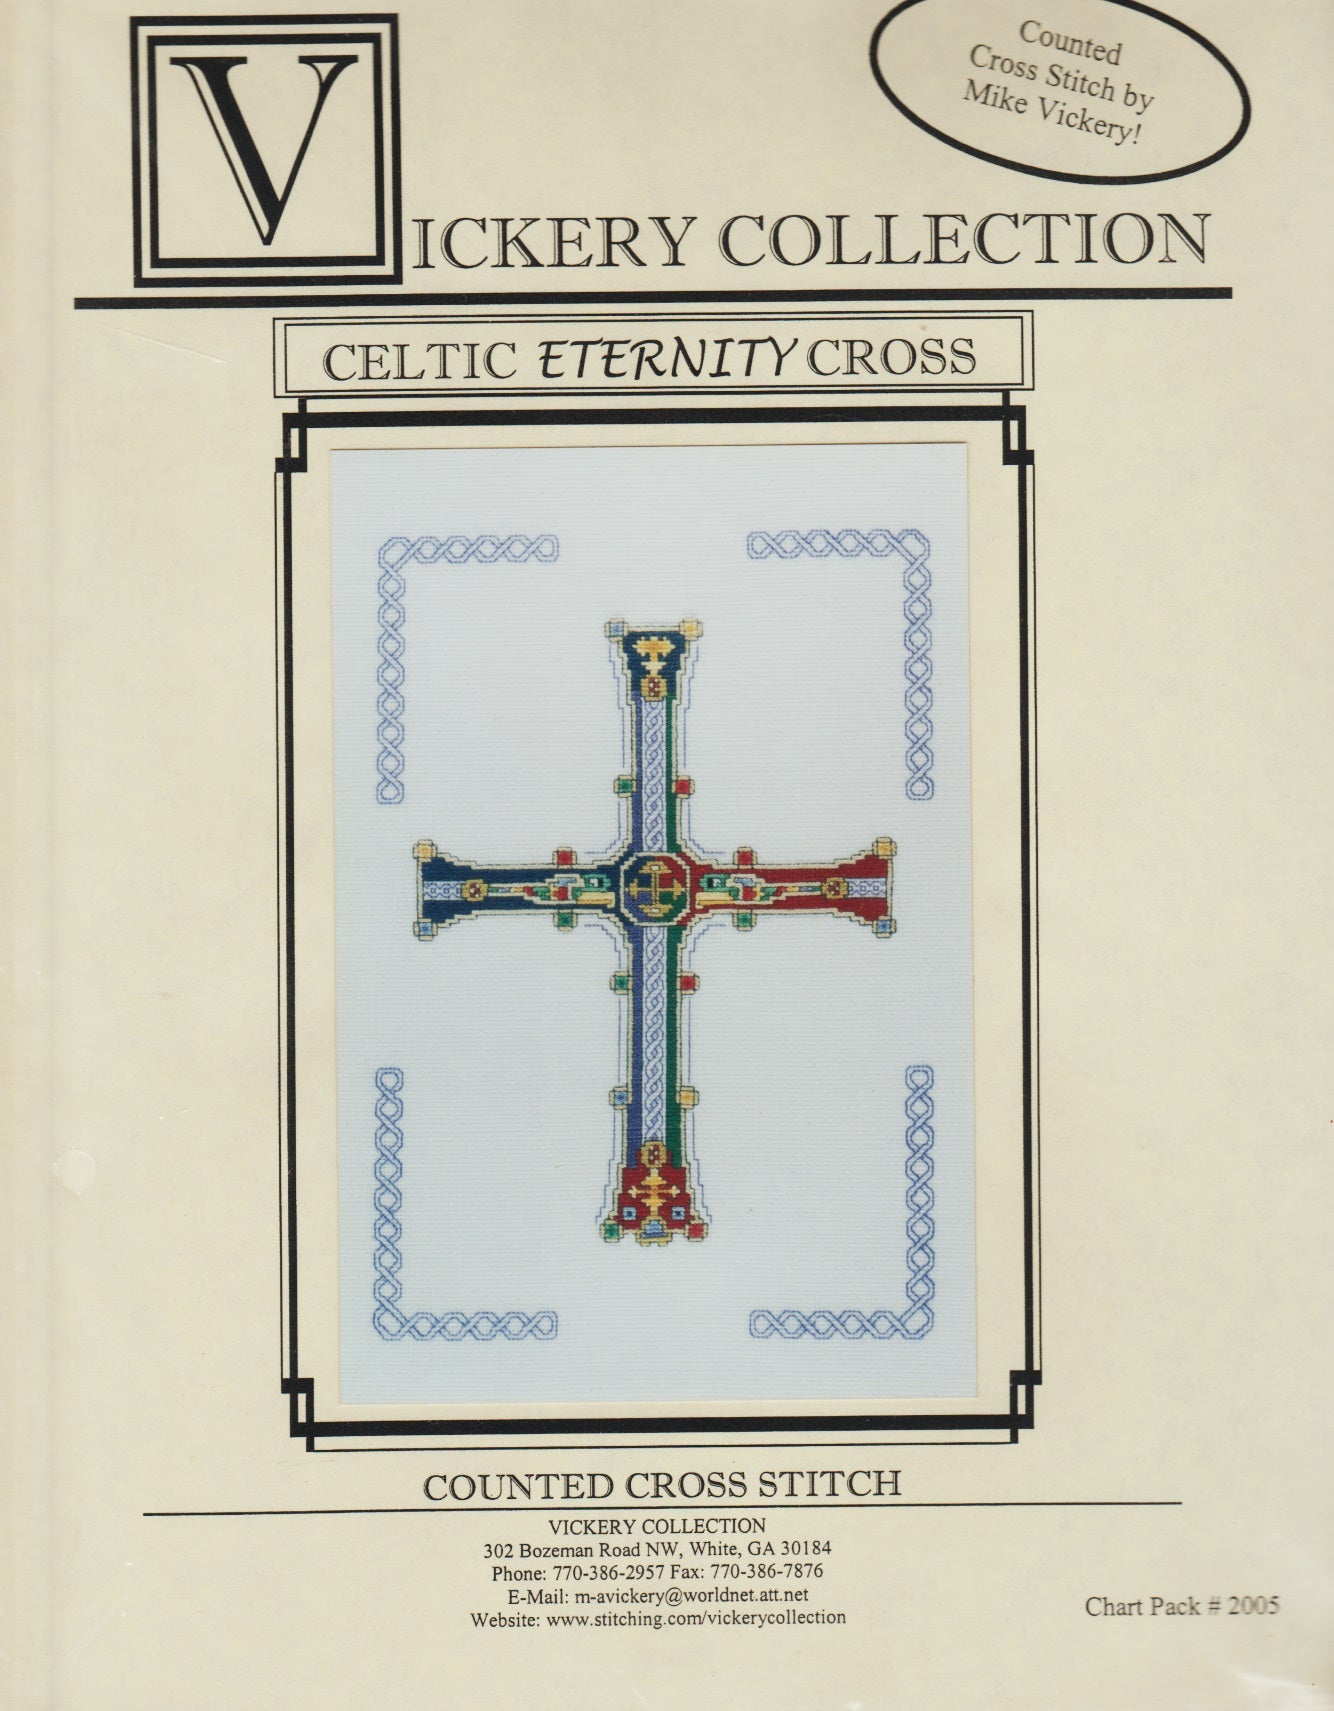 Vickery Collection Celtic Eternity Cross 2005 cross stitch pattern